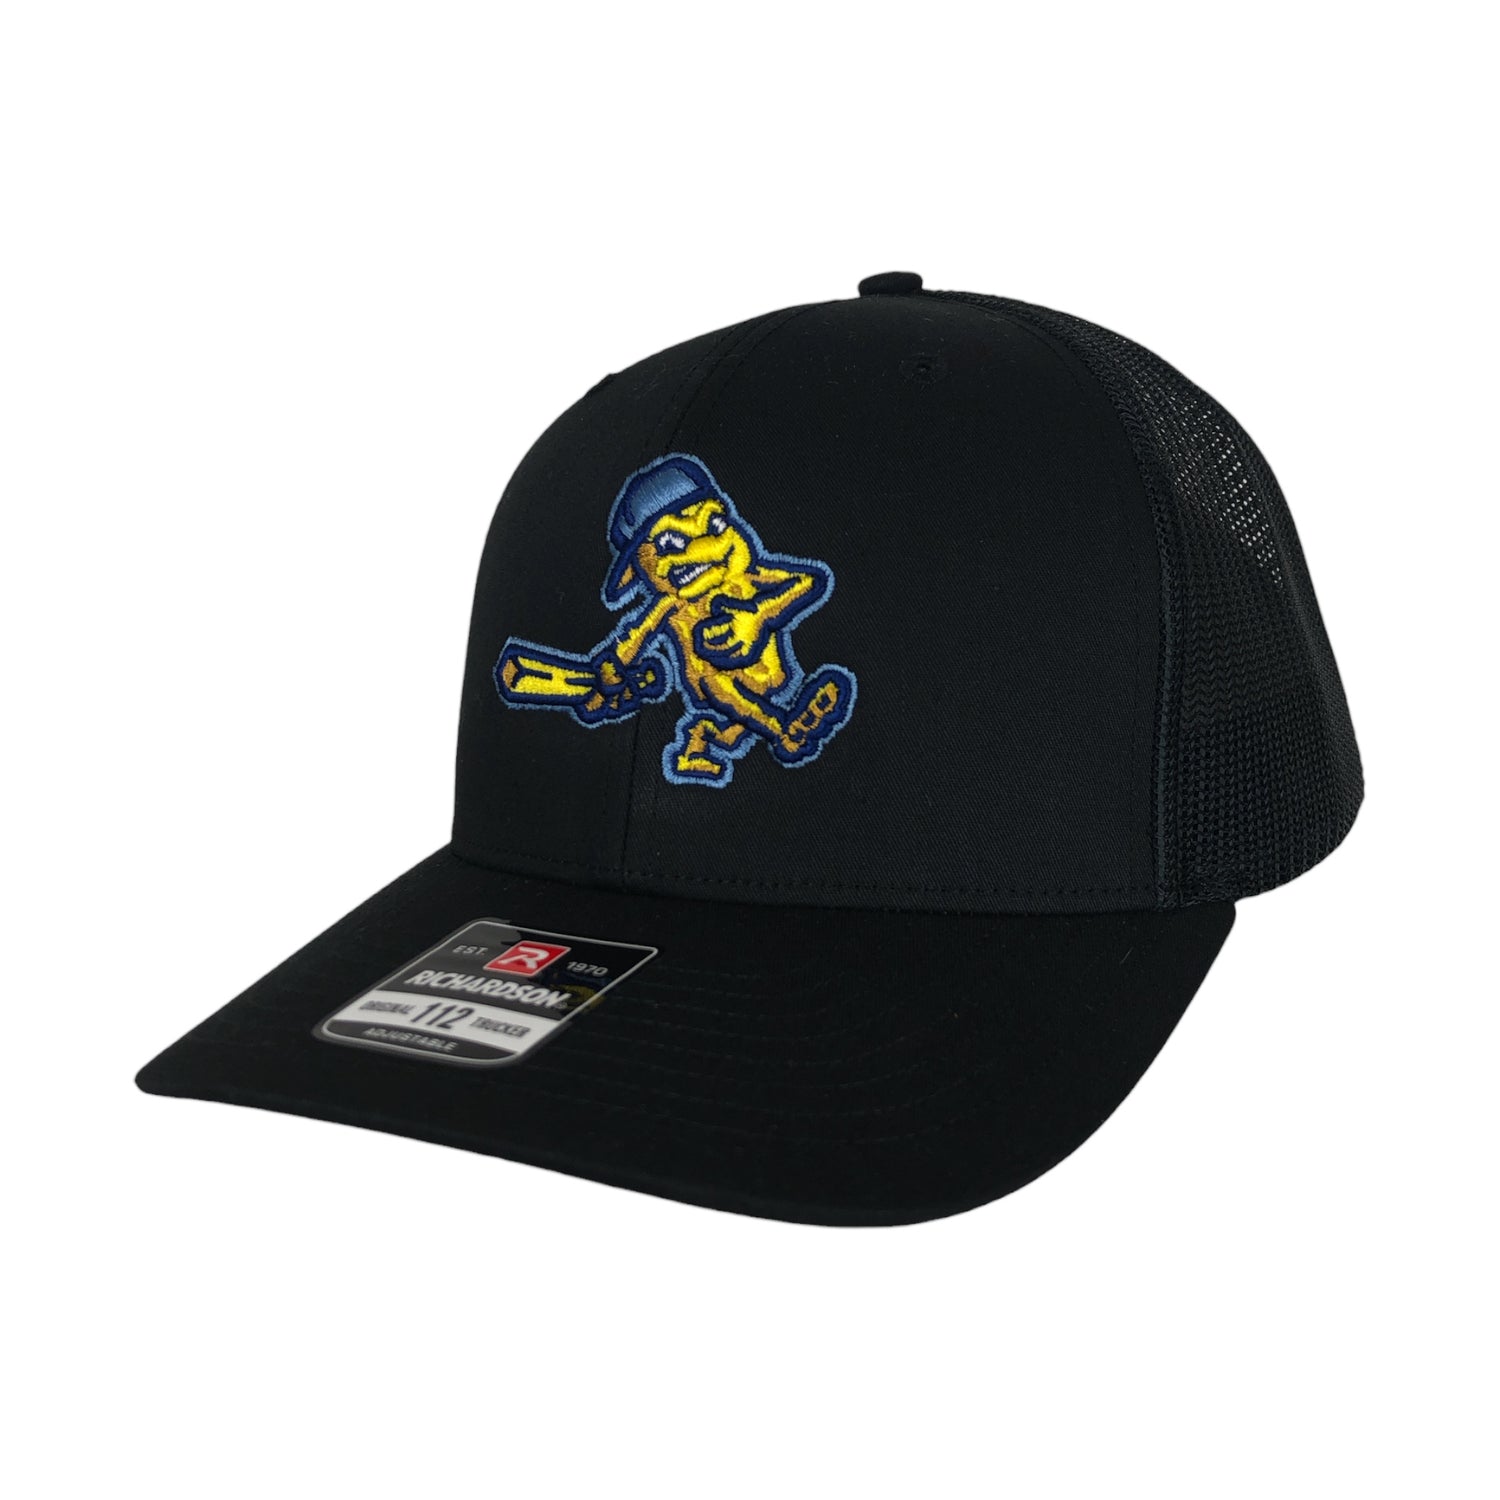 DubSea Fish Sticks black, adjustable, Richardson 112 trucker hat.